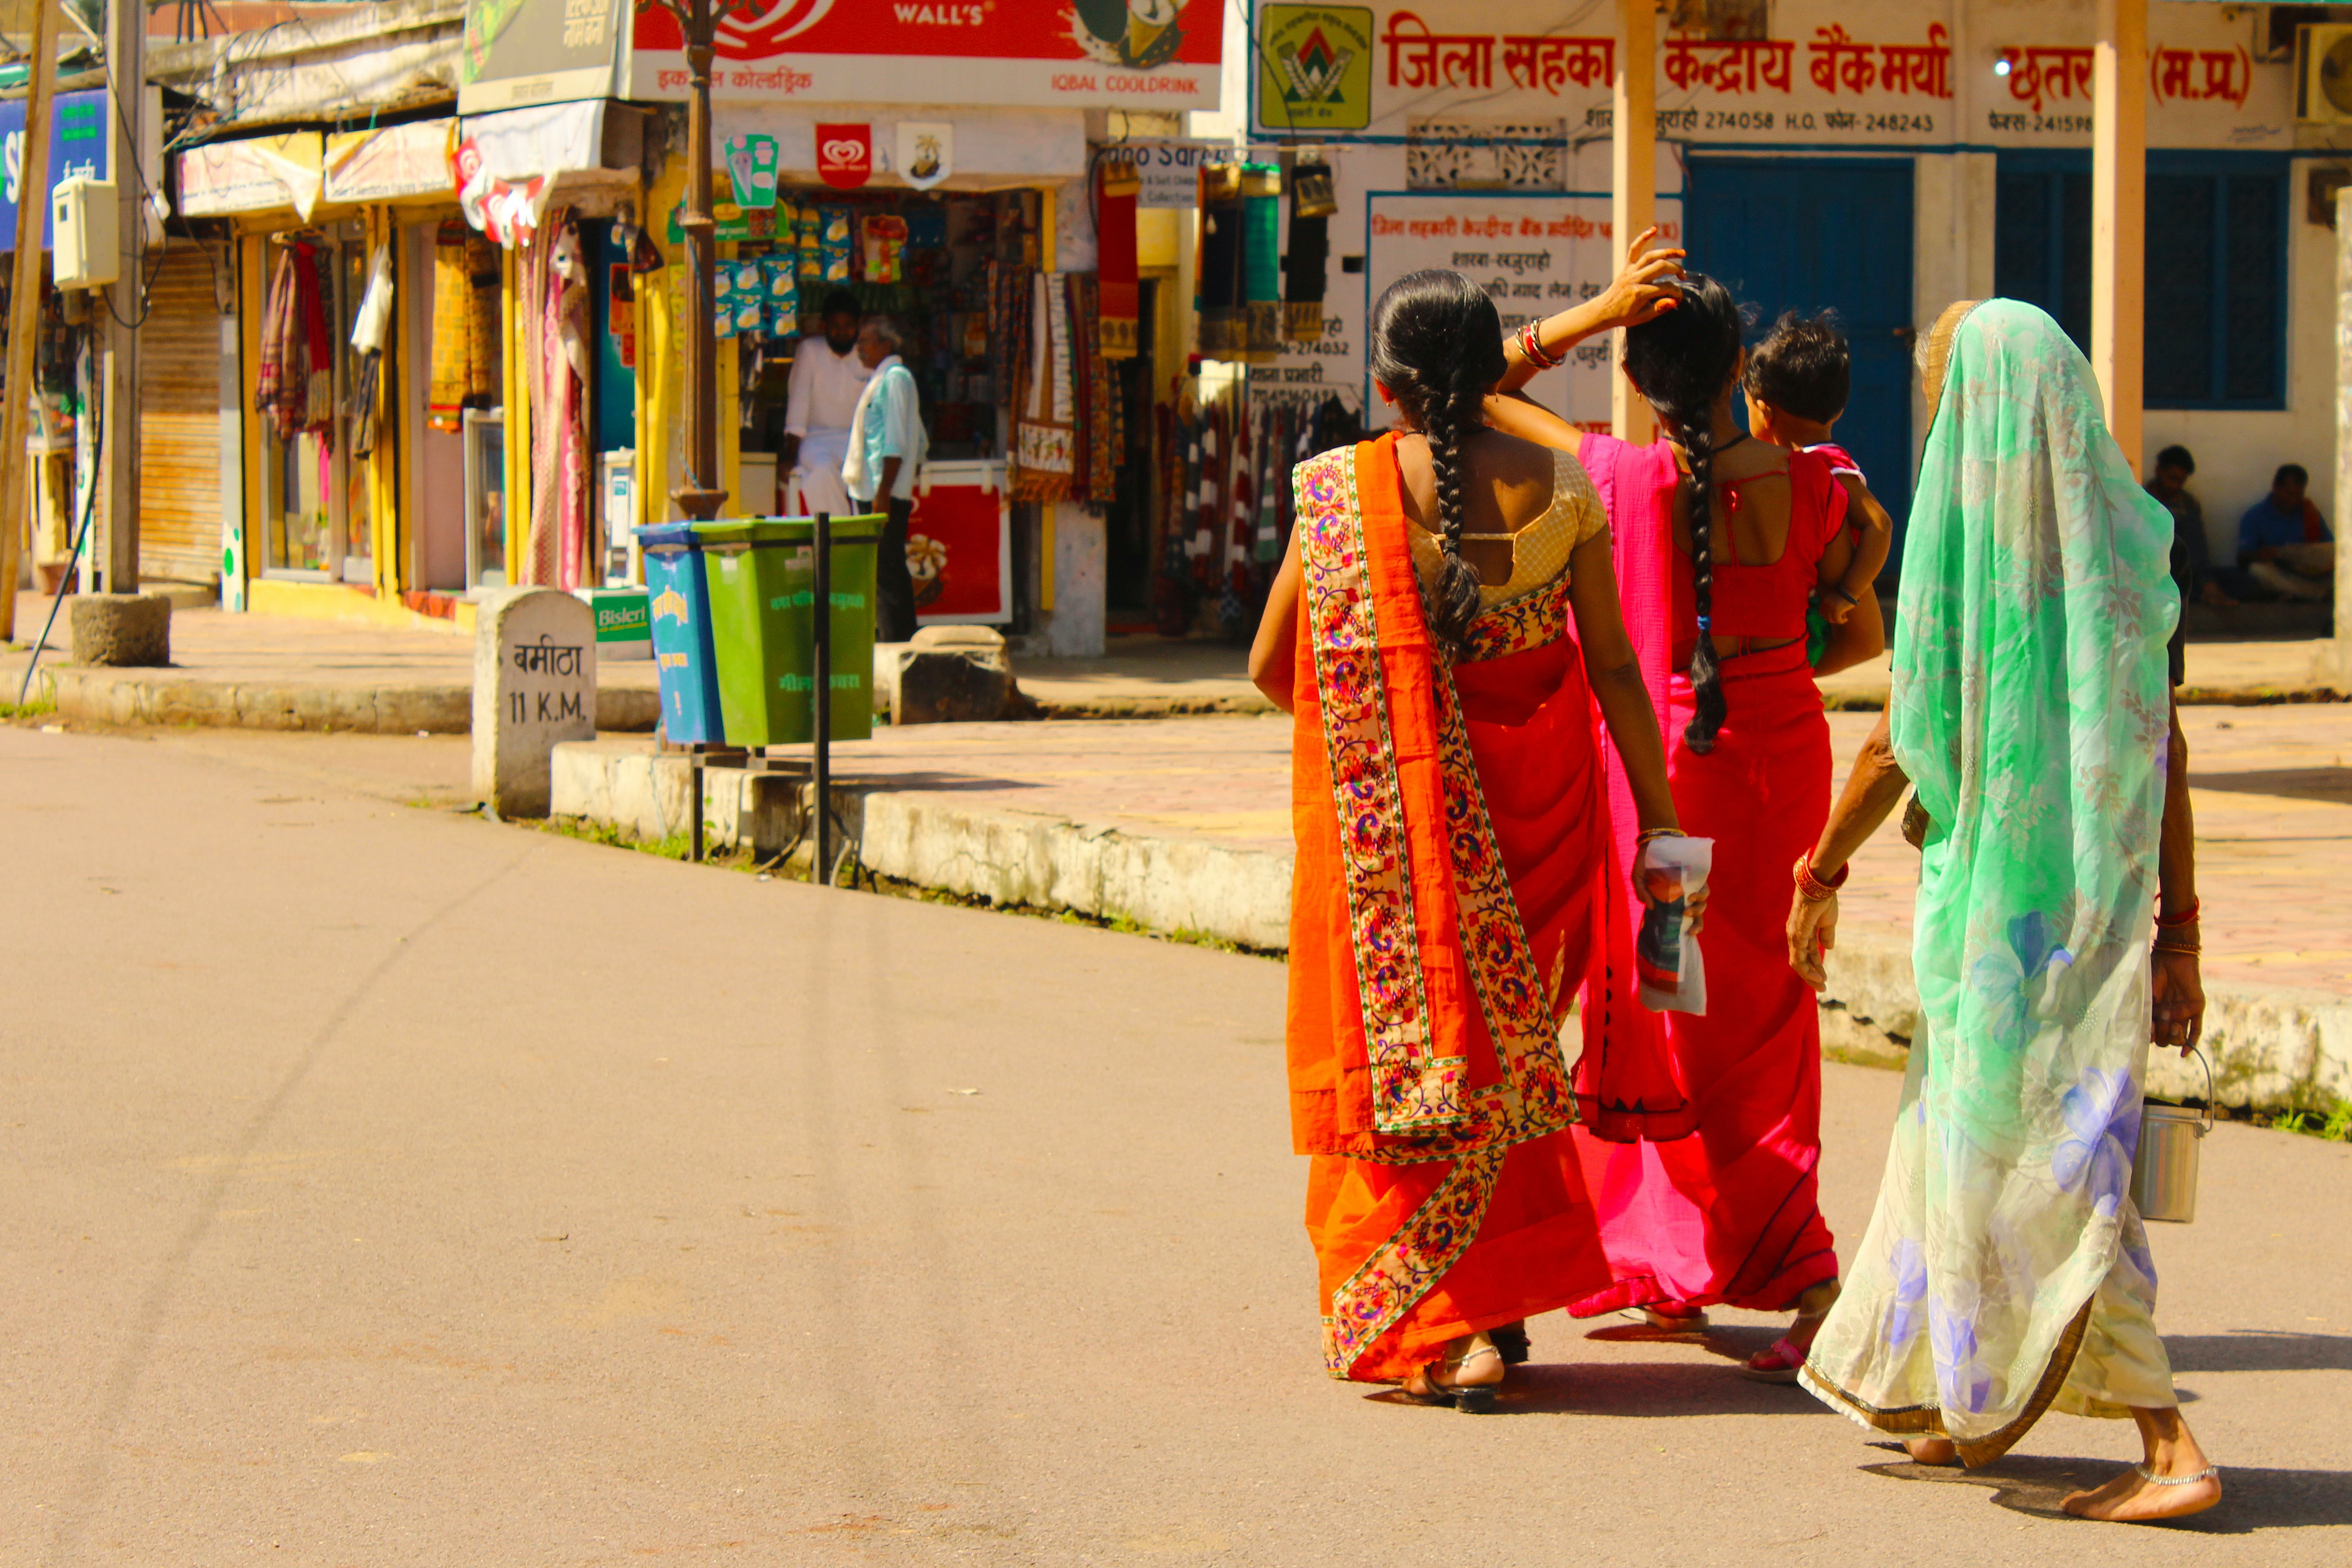 Women walking down the street in India